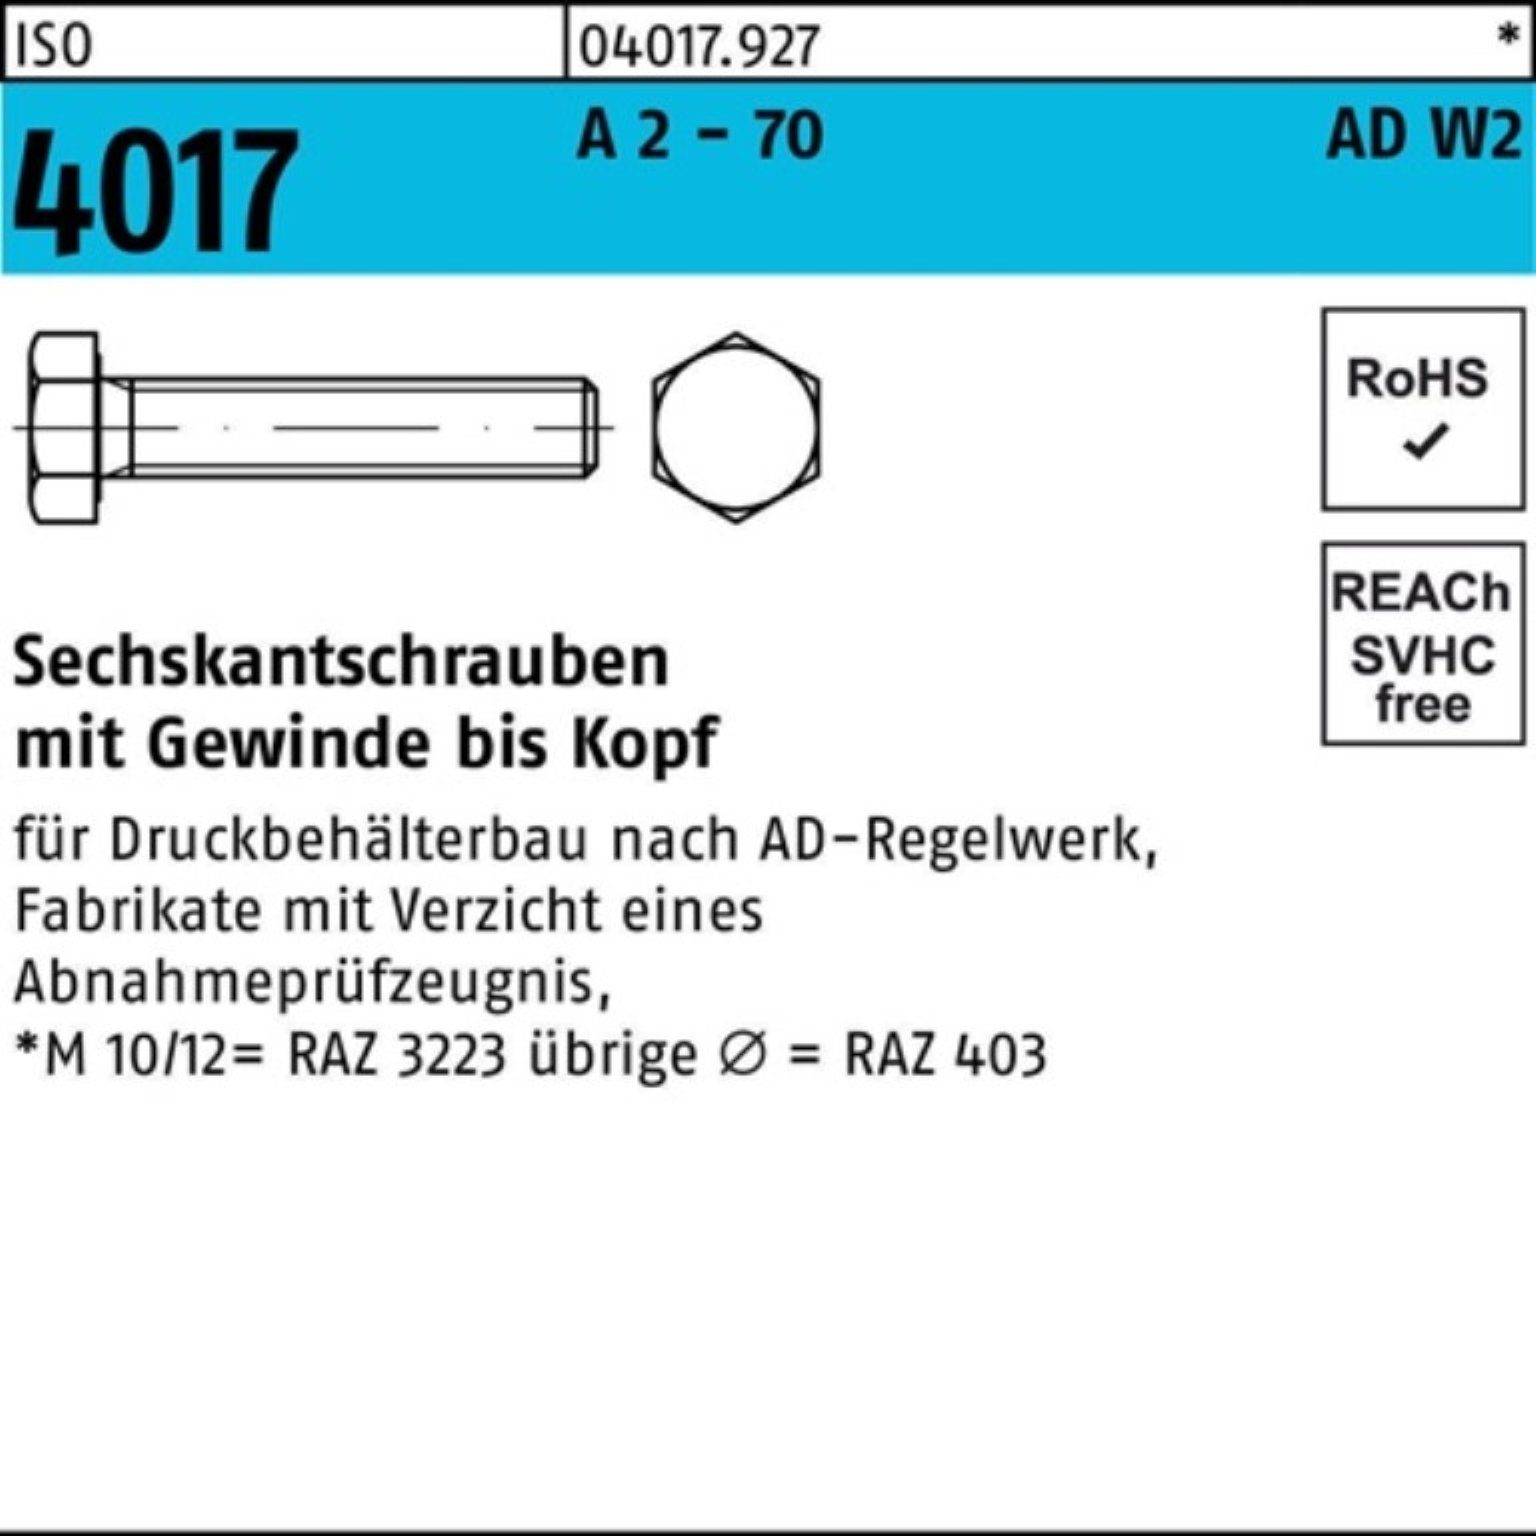 Sechskantschraube 50 Bufab 2 AD-W2 35 100er M12x St Sechskantschraube Pack - A ISO 4017 VG 70